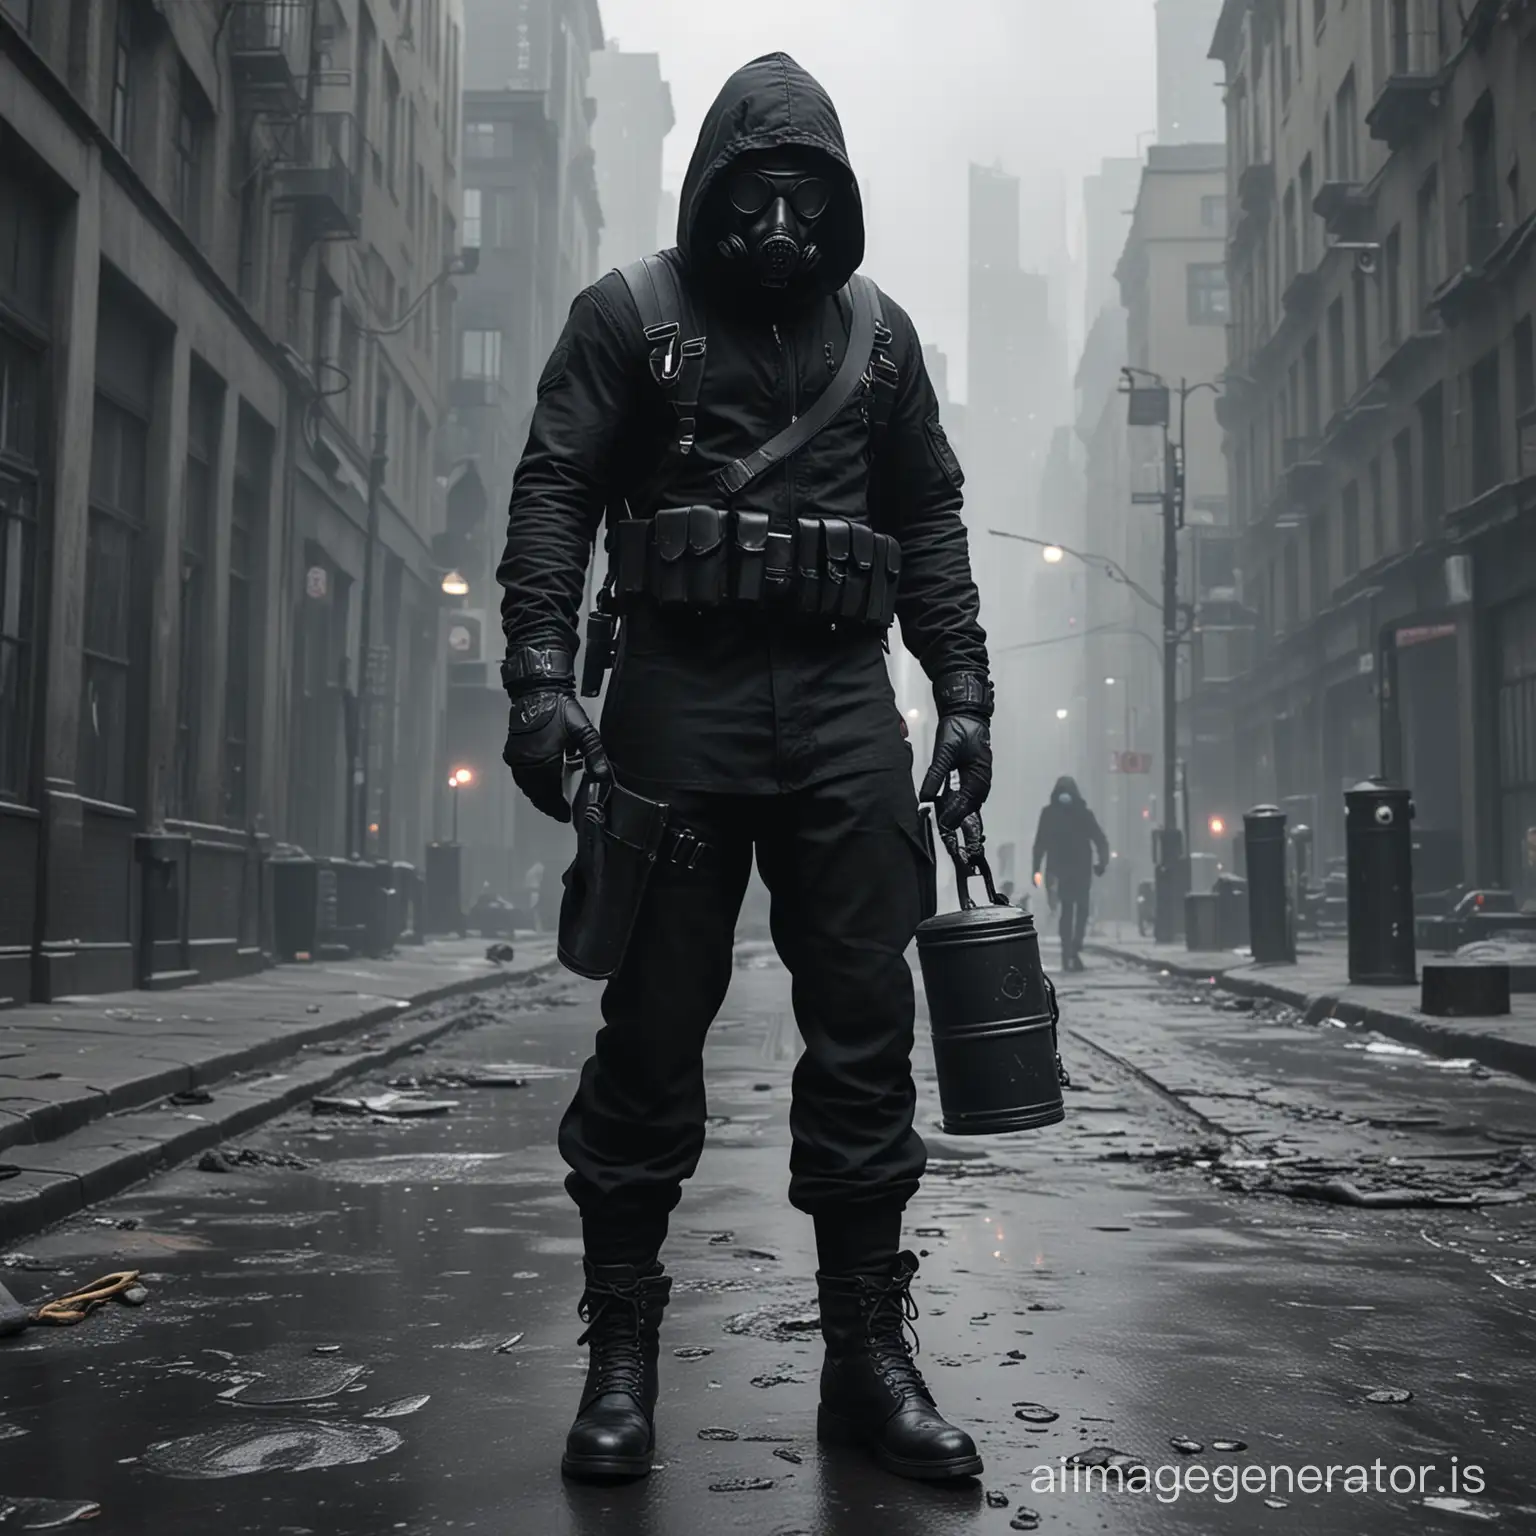 Urban-Survivalist-in-Black-Gas-Mask-and-Clothing-Futuristic-Cityscape